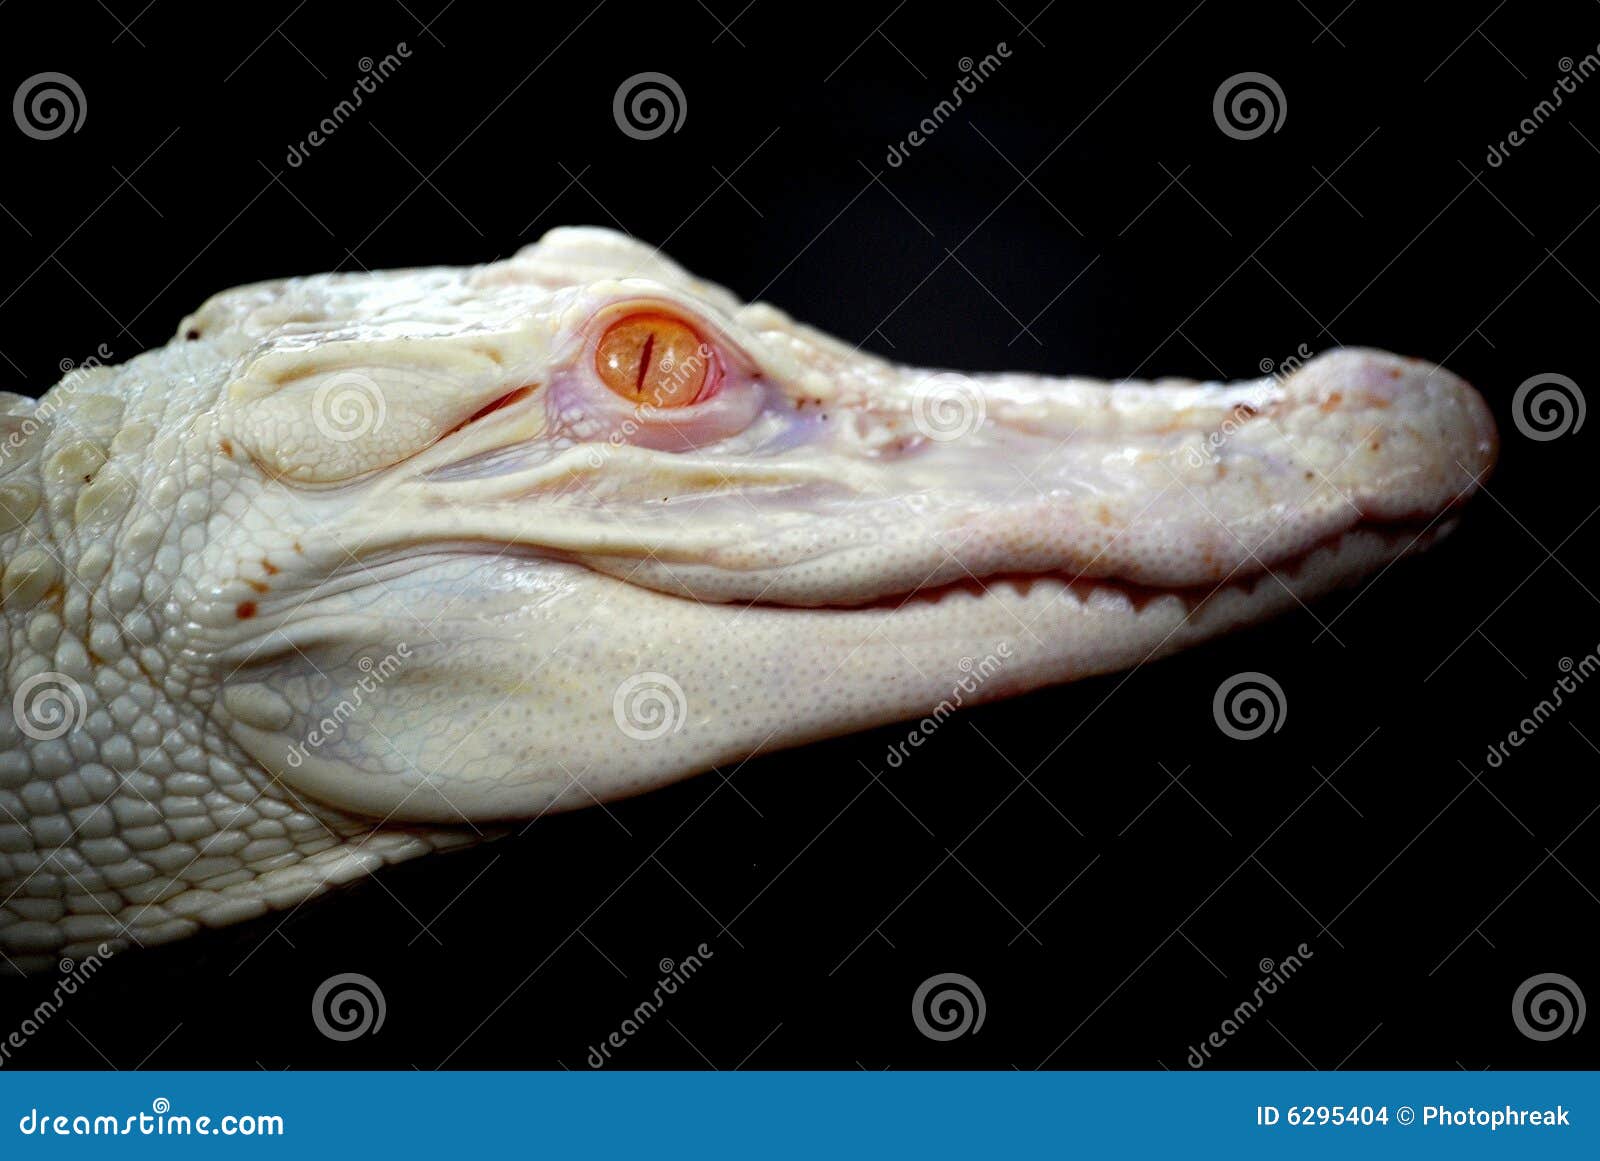 baby albino alligator